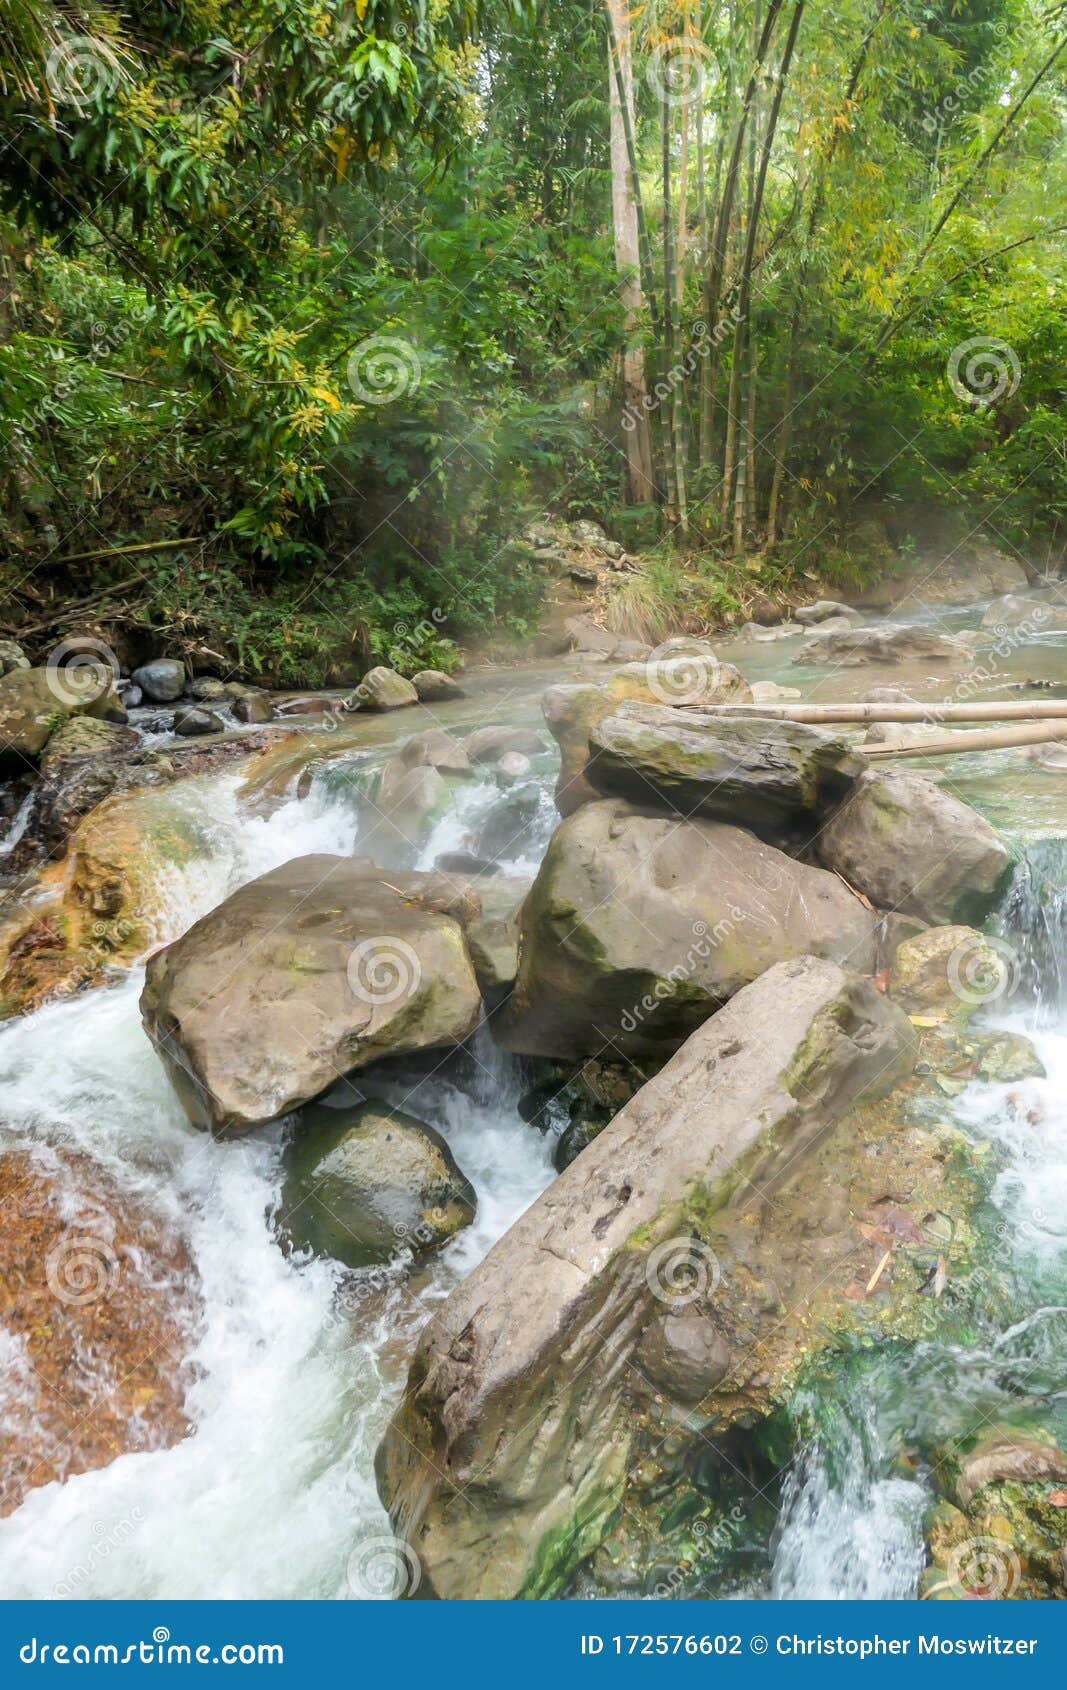 bajawa - hot spring meets the cold river